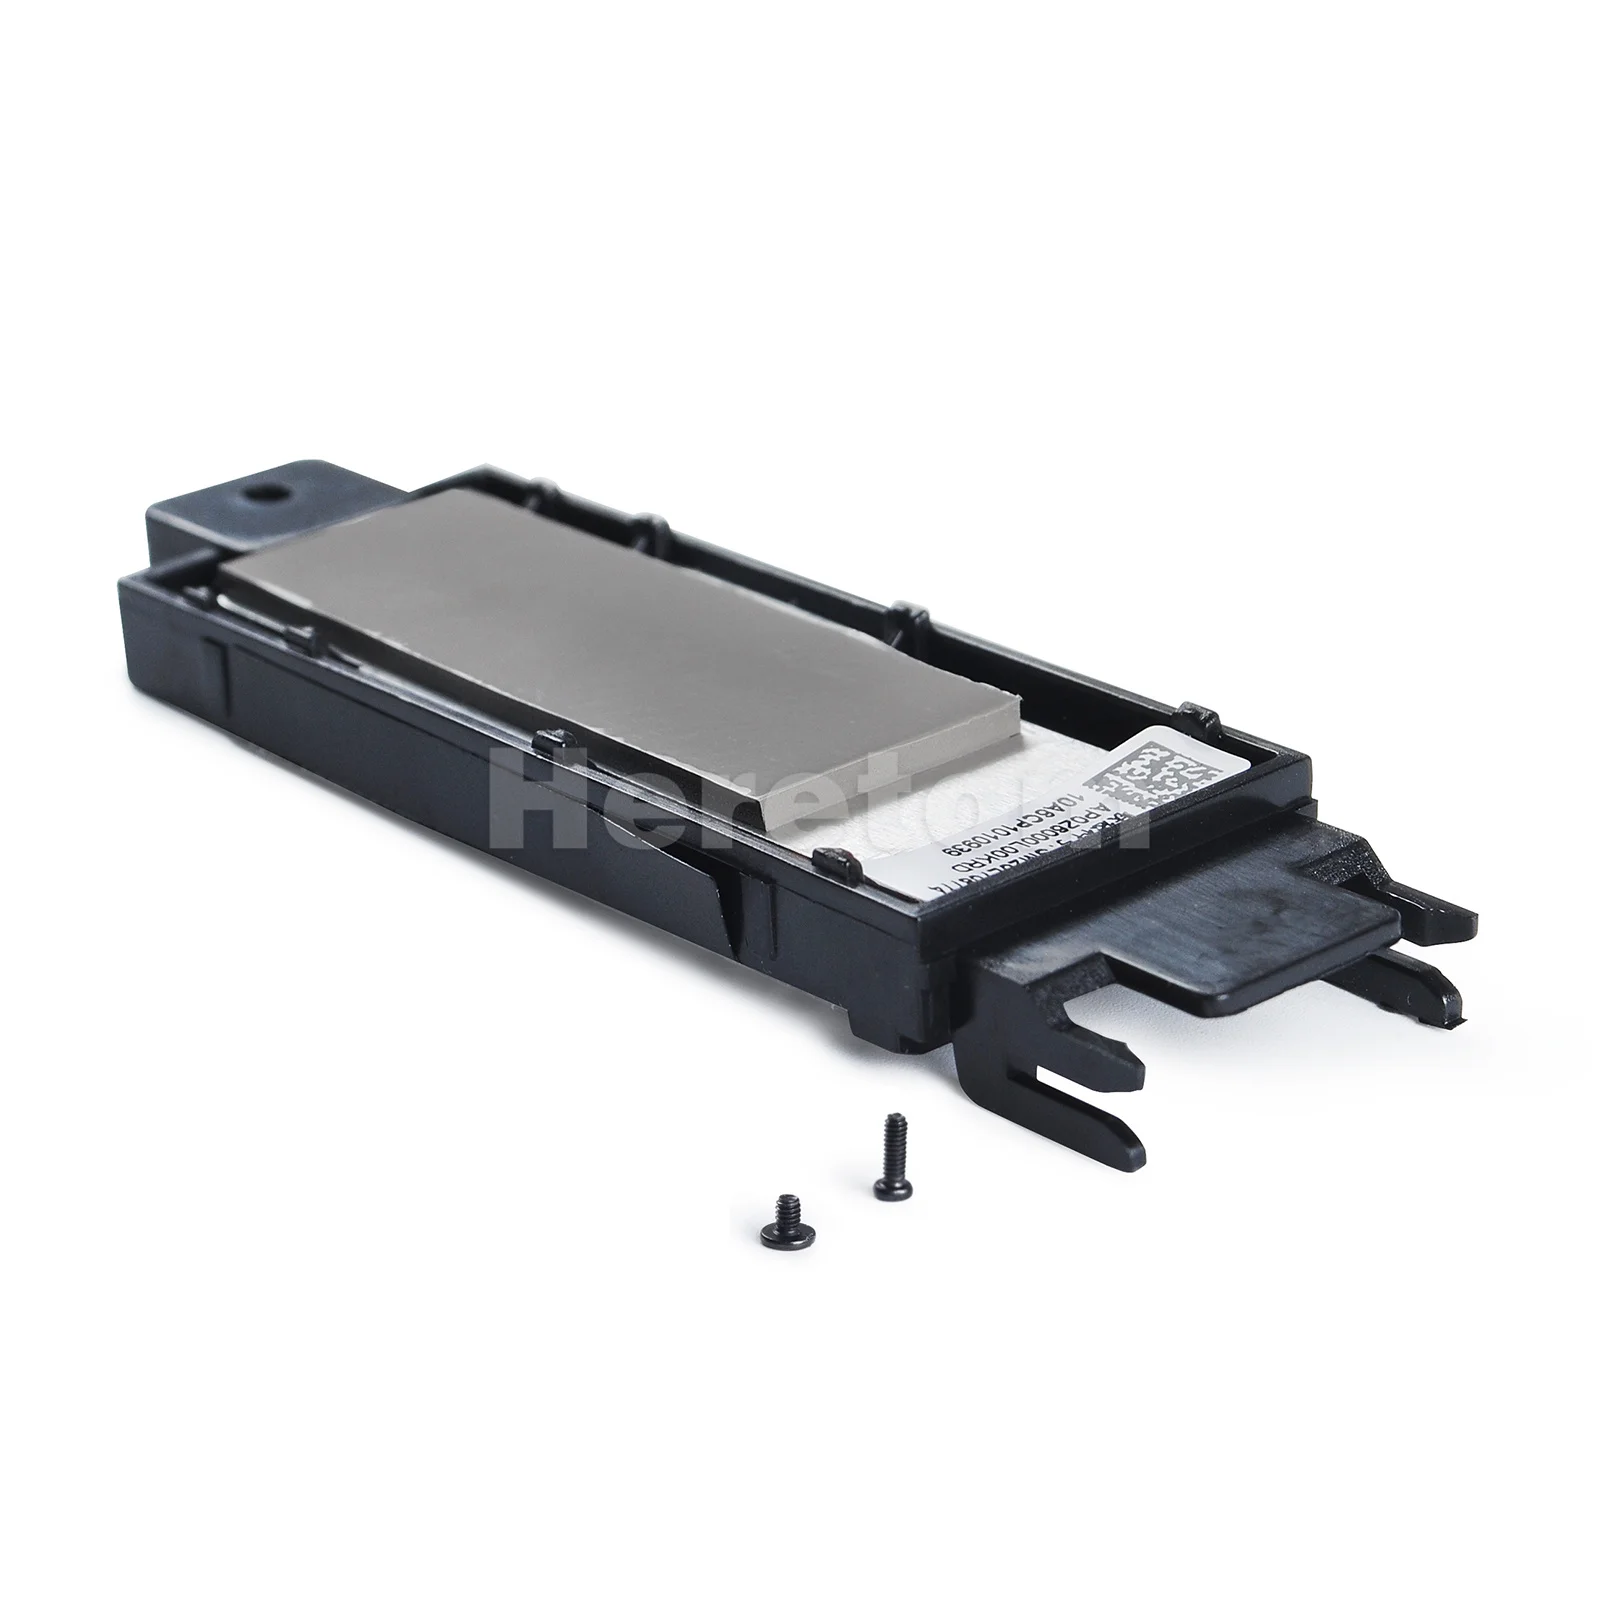 NGFF  PCIE SSD Caddy Tray Bracket Holder for Lenovo ThinkPad P50 P51 P70  Laptop 00UR868 _ - AliExpress Mobile